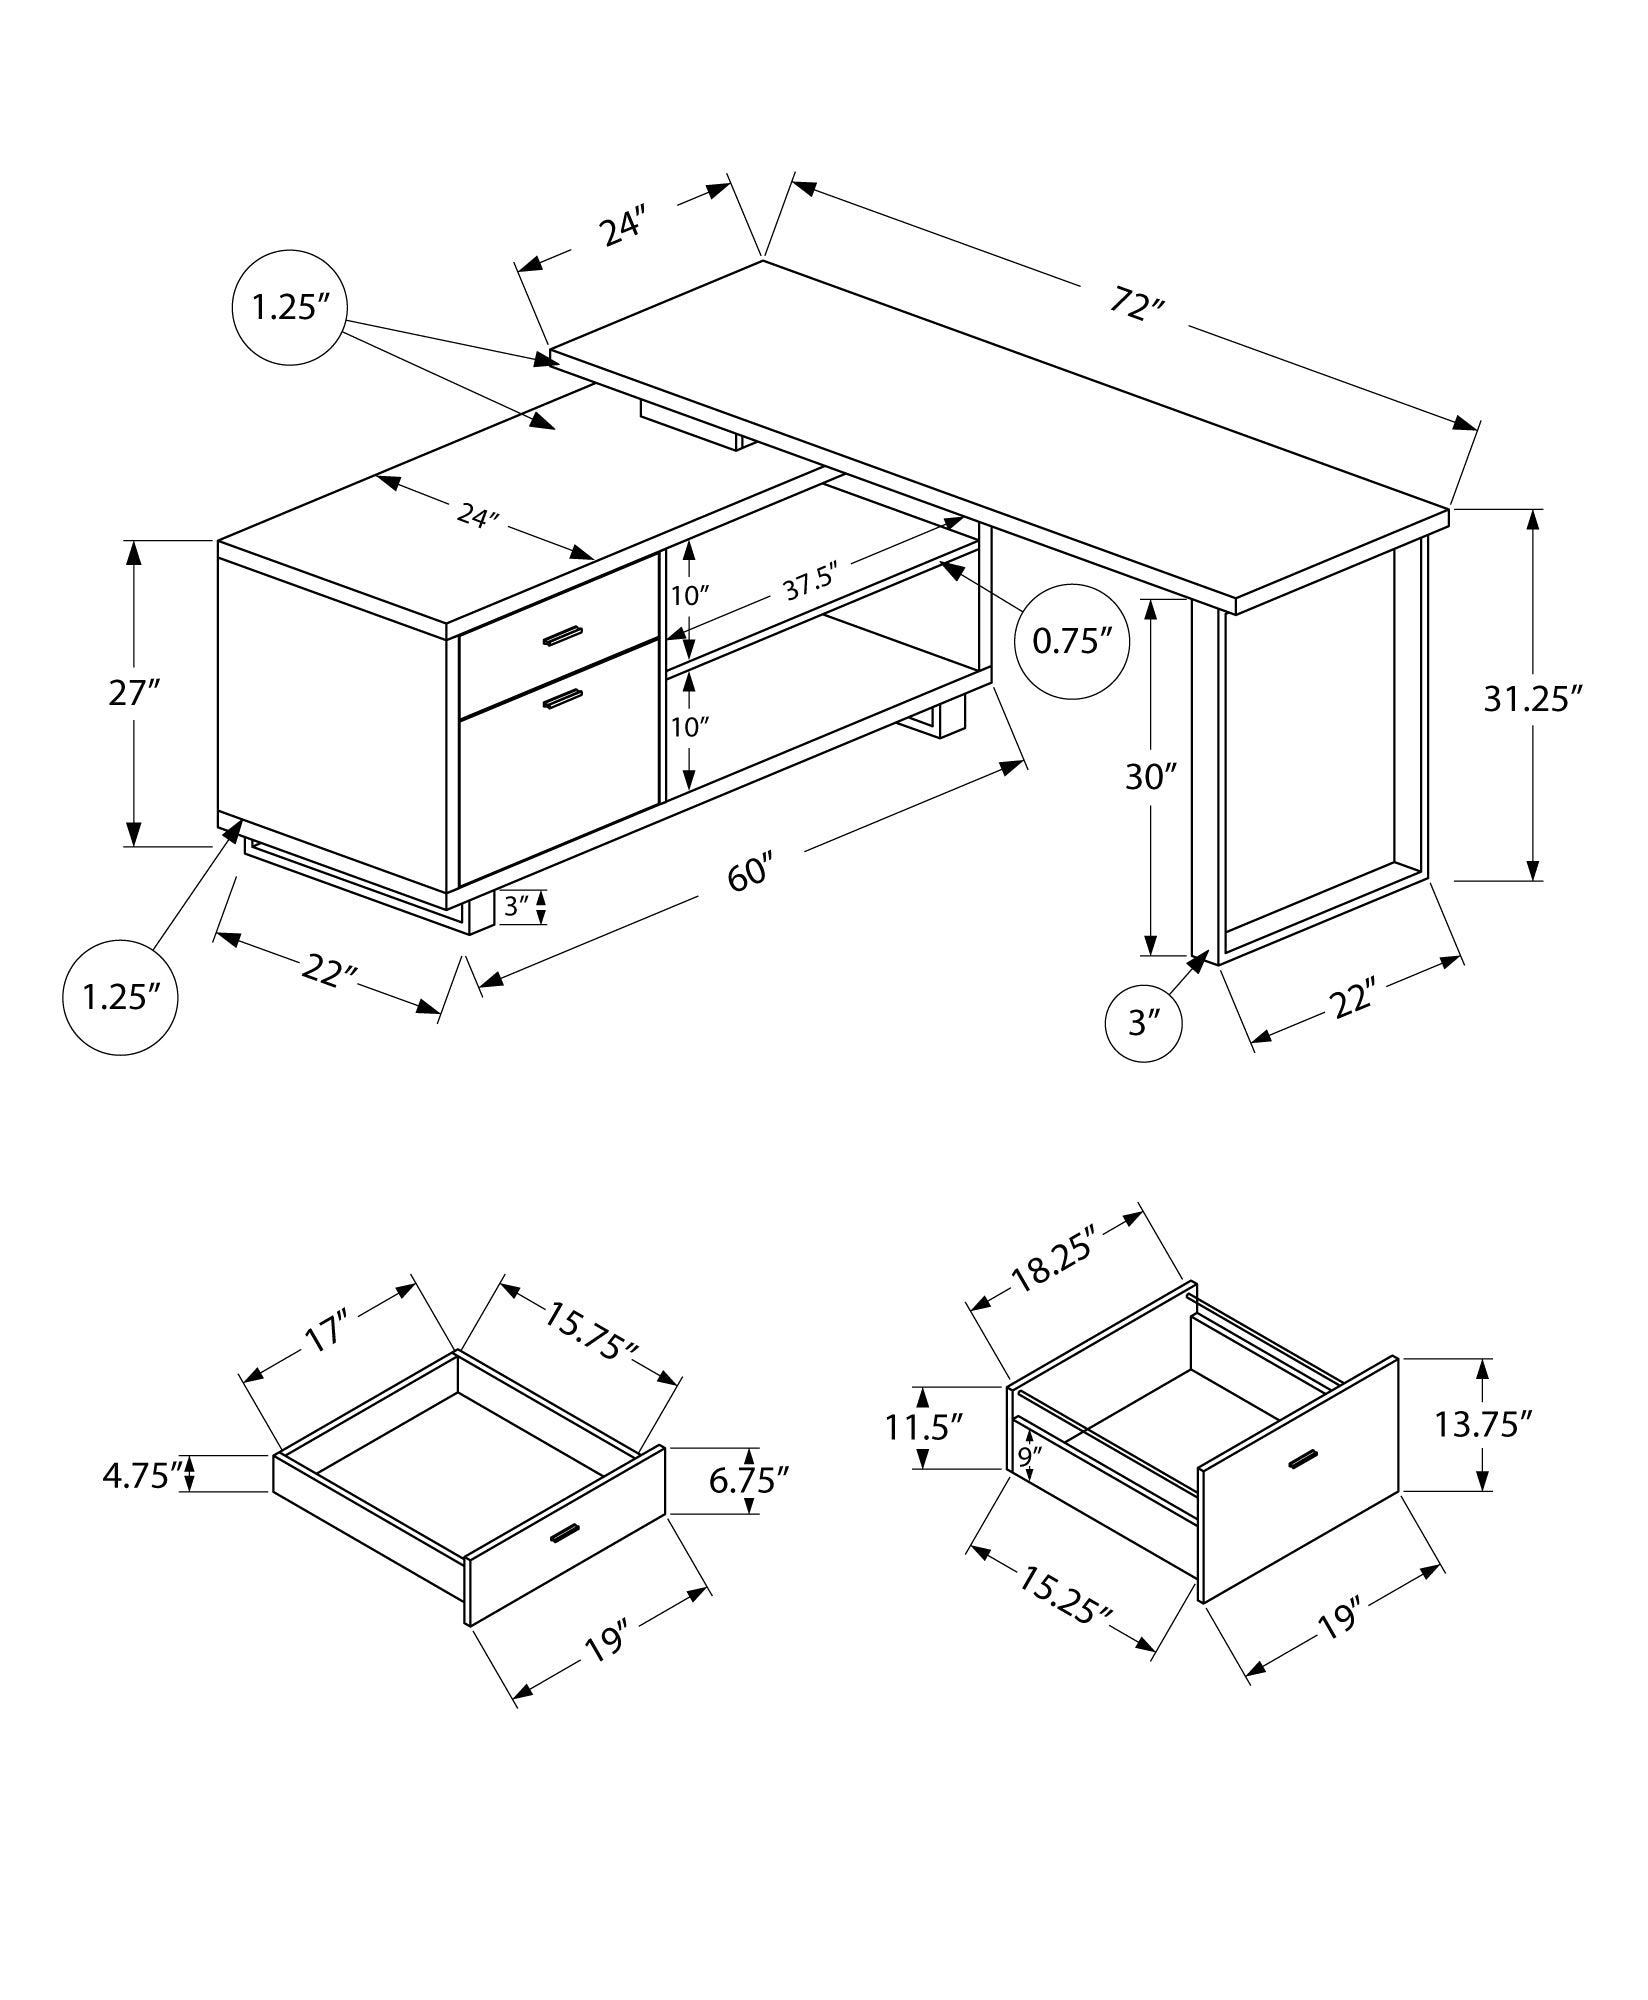 MN-947717    Computer Desk - L-Shaped / Corner / 2 Drawers / Metal Legs / Reversible - 72"L X 60"W - Black / Silver